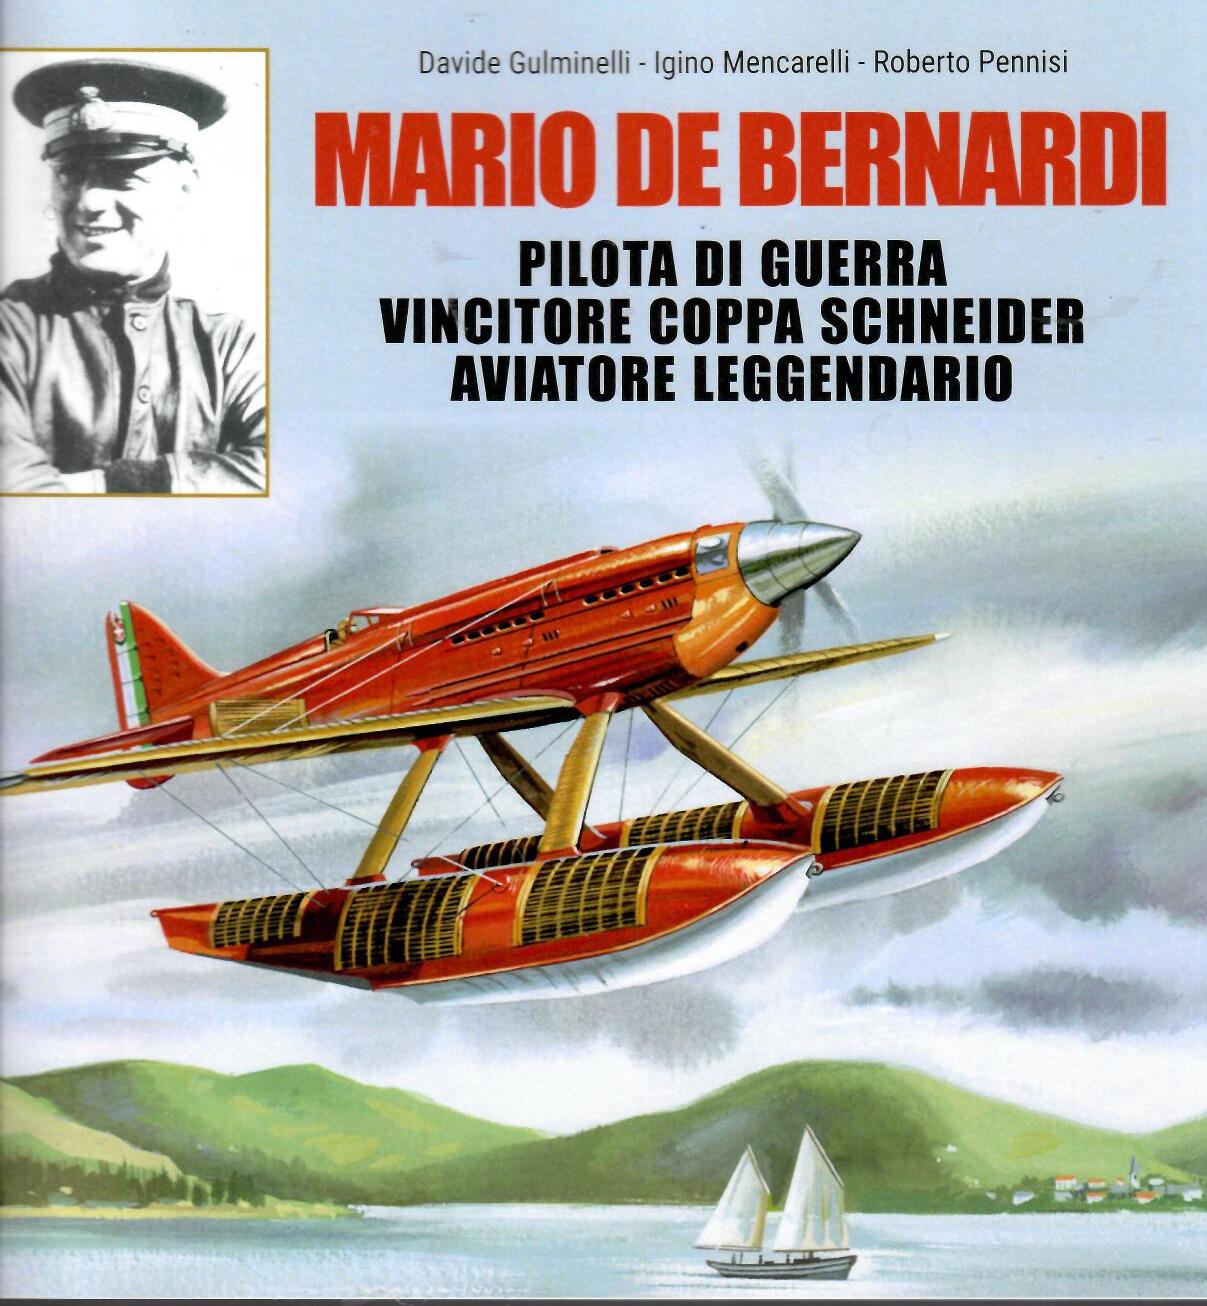 Mario De Bernardi pilota di guerra, vincitore coppa Schneider, aviatore leggendario